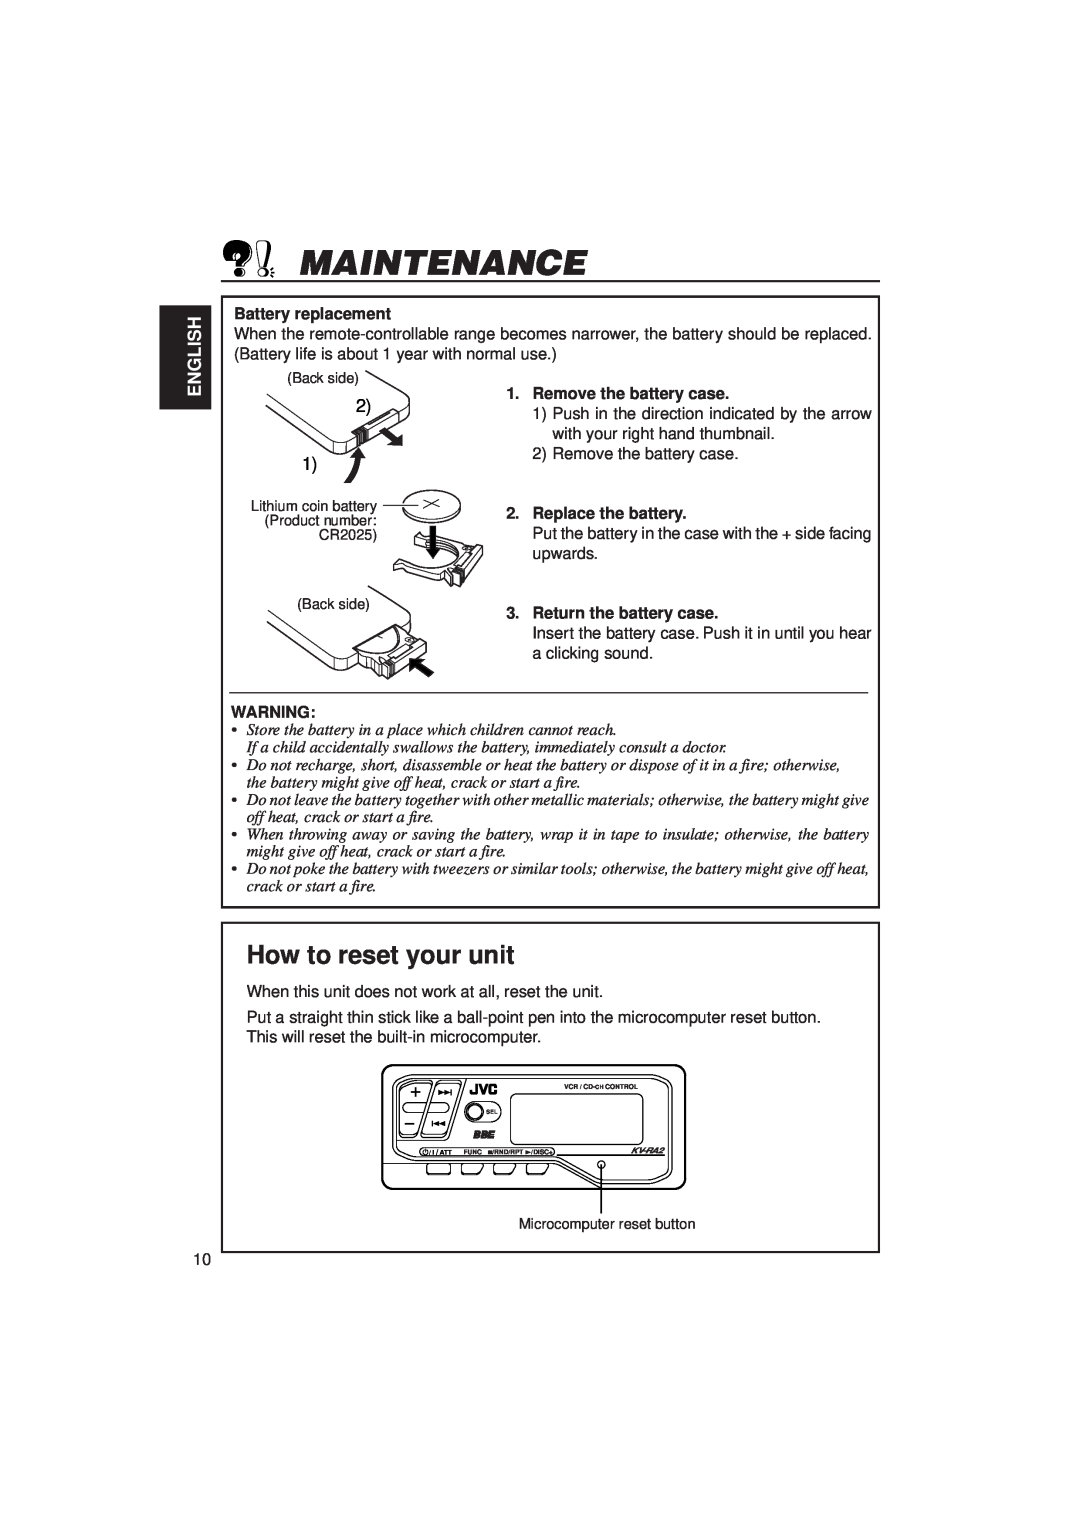 JVC KV-RA2 manual Maintenance, How to reset your unit, English 